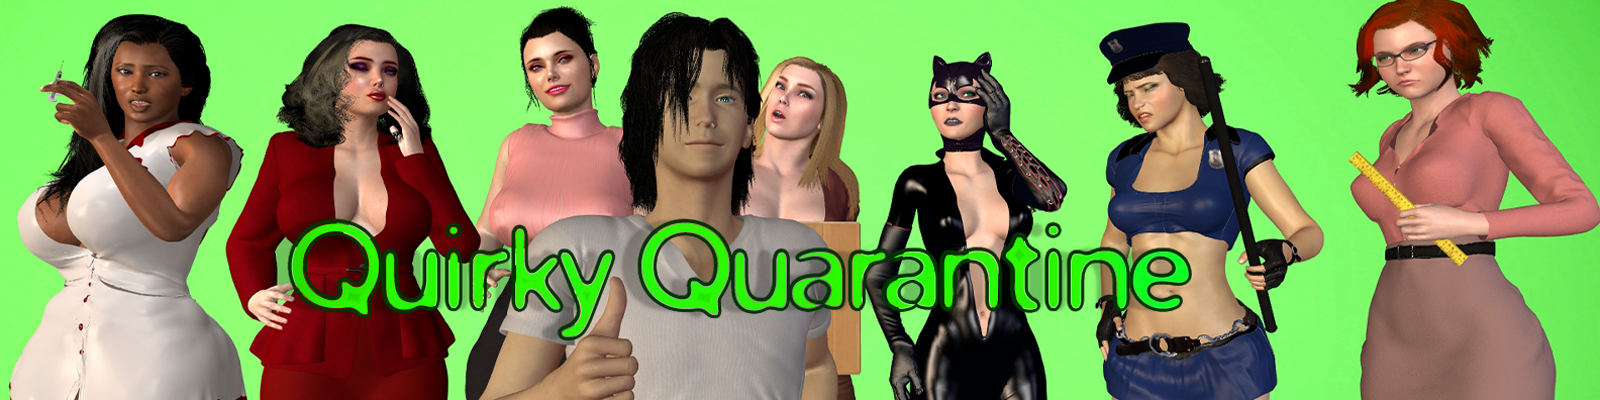 Quirky Porn - Get Quirky Quarantine v1.0 for free